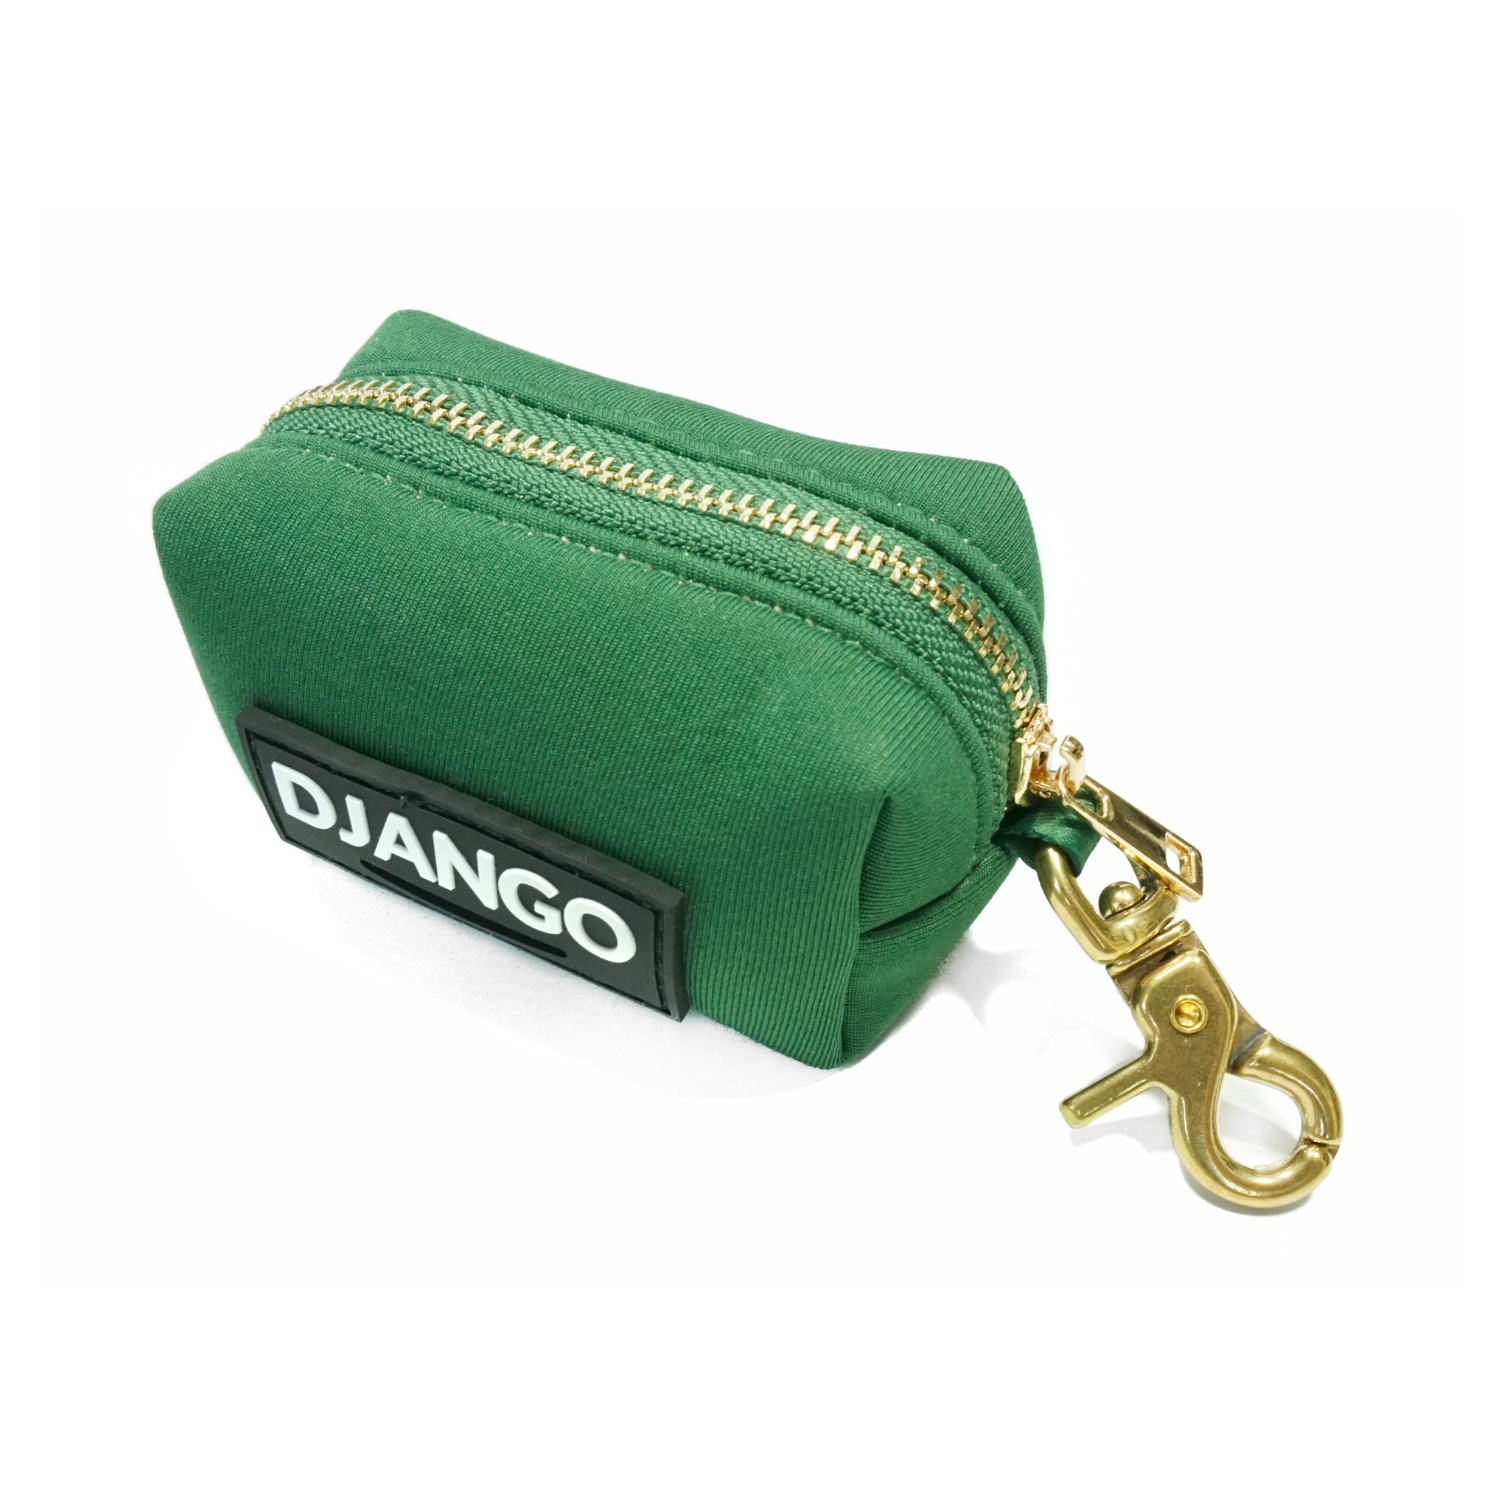 DJANGO Dog Waste Bag Holder - Stylish and classy poop bag holder for dogs - Forest Green neoprene with solid brass hardware - djangobrand.com